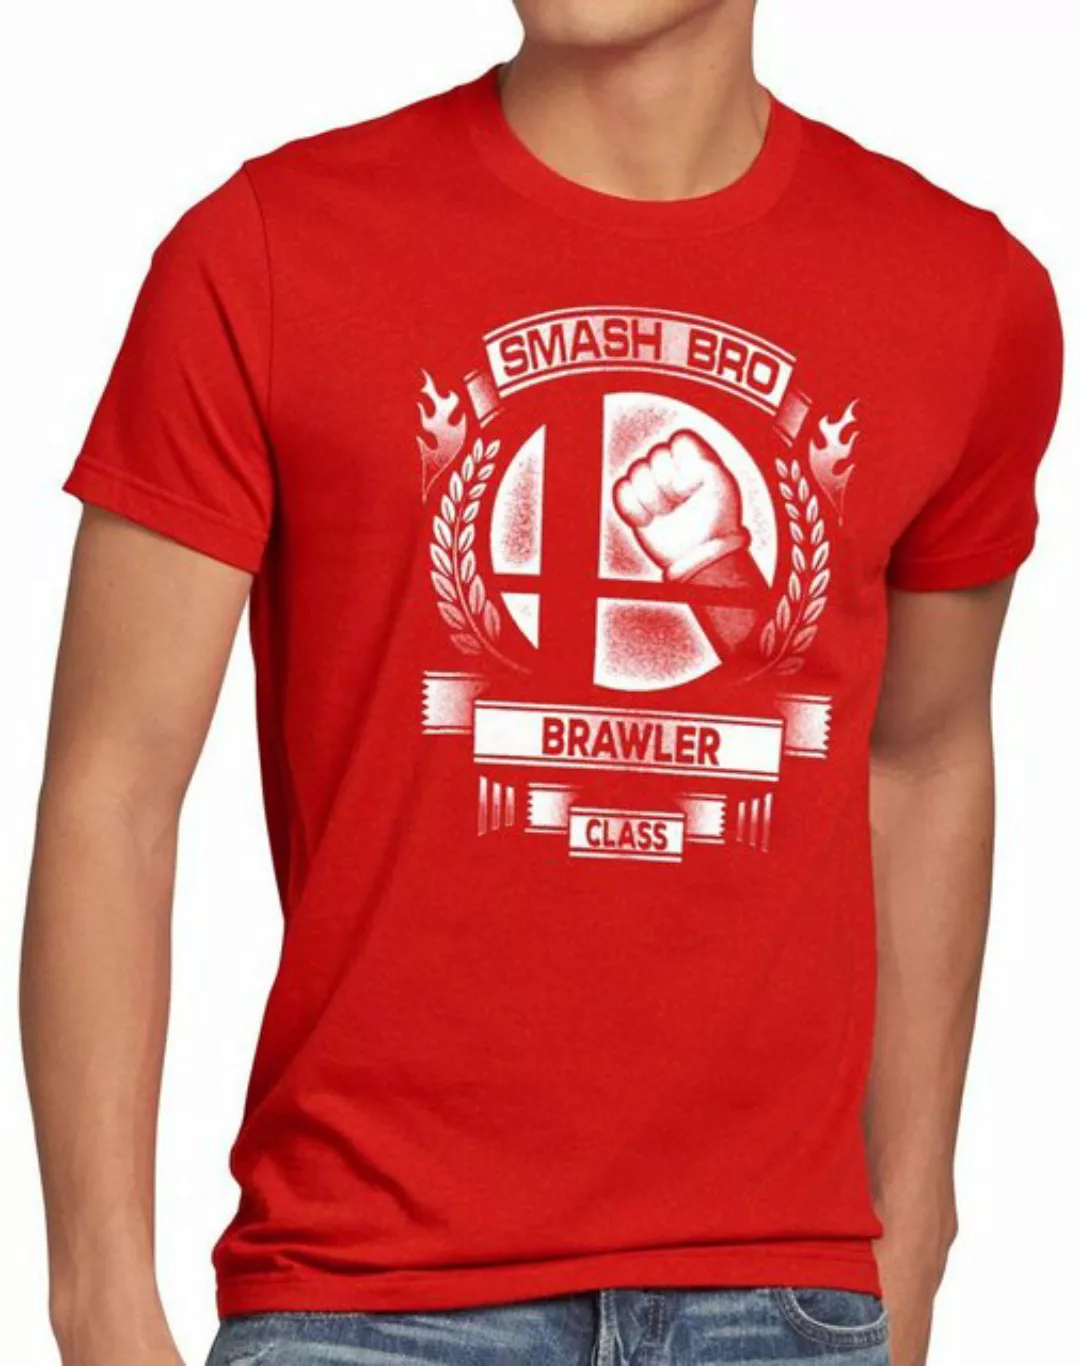 style3 Print-Shirt Herren T-Shirt Brawler Smash ultimate brothers super swi günstig online kaufen